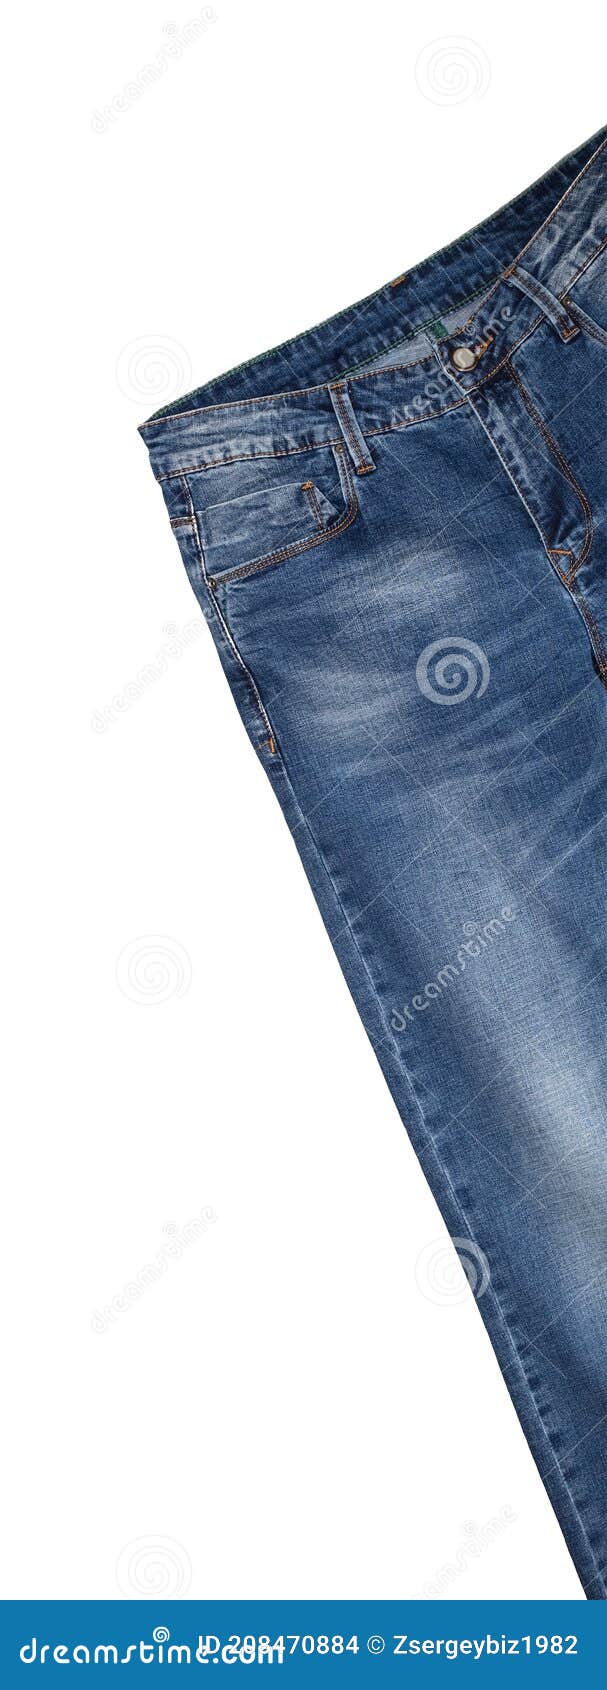 LAKENZIE Light Wash Distressed Bleach Spot Skinny Denim Blue Jeans Womens L  | eBay